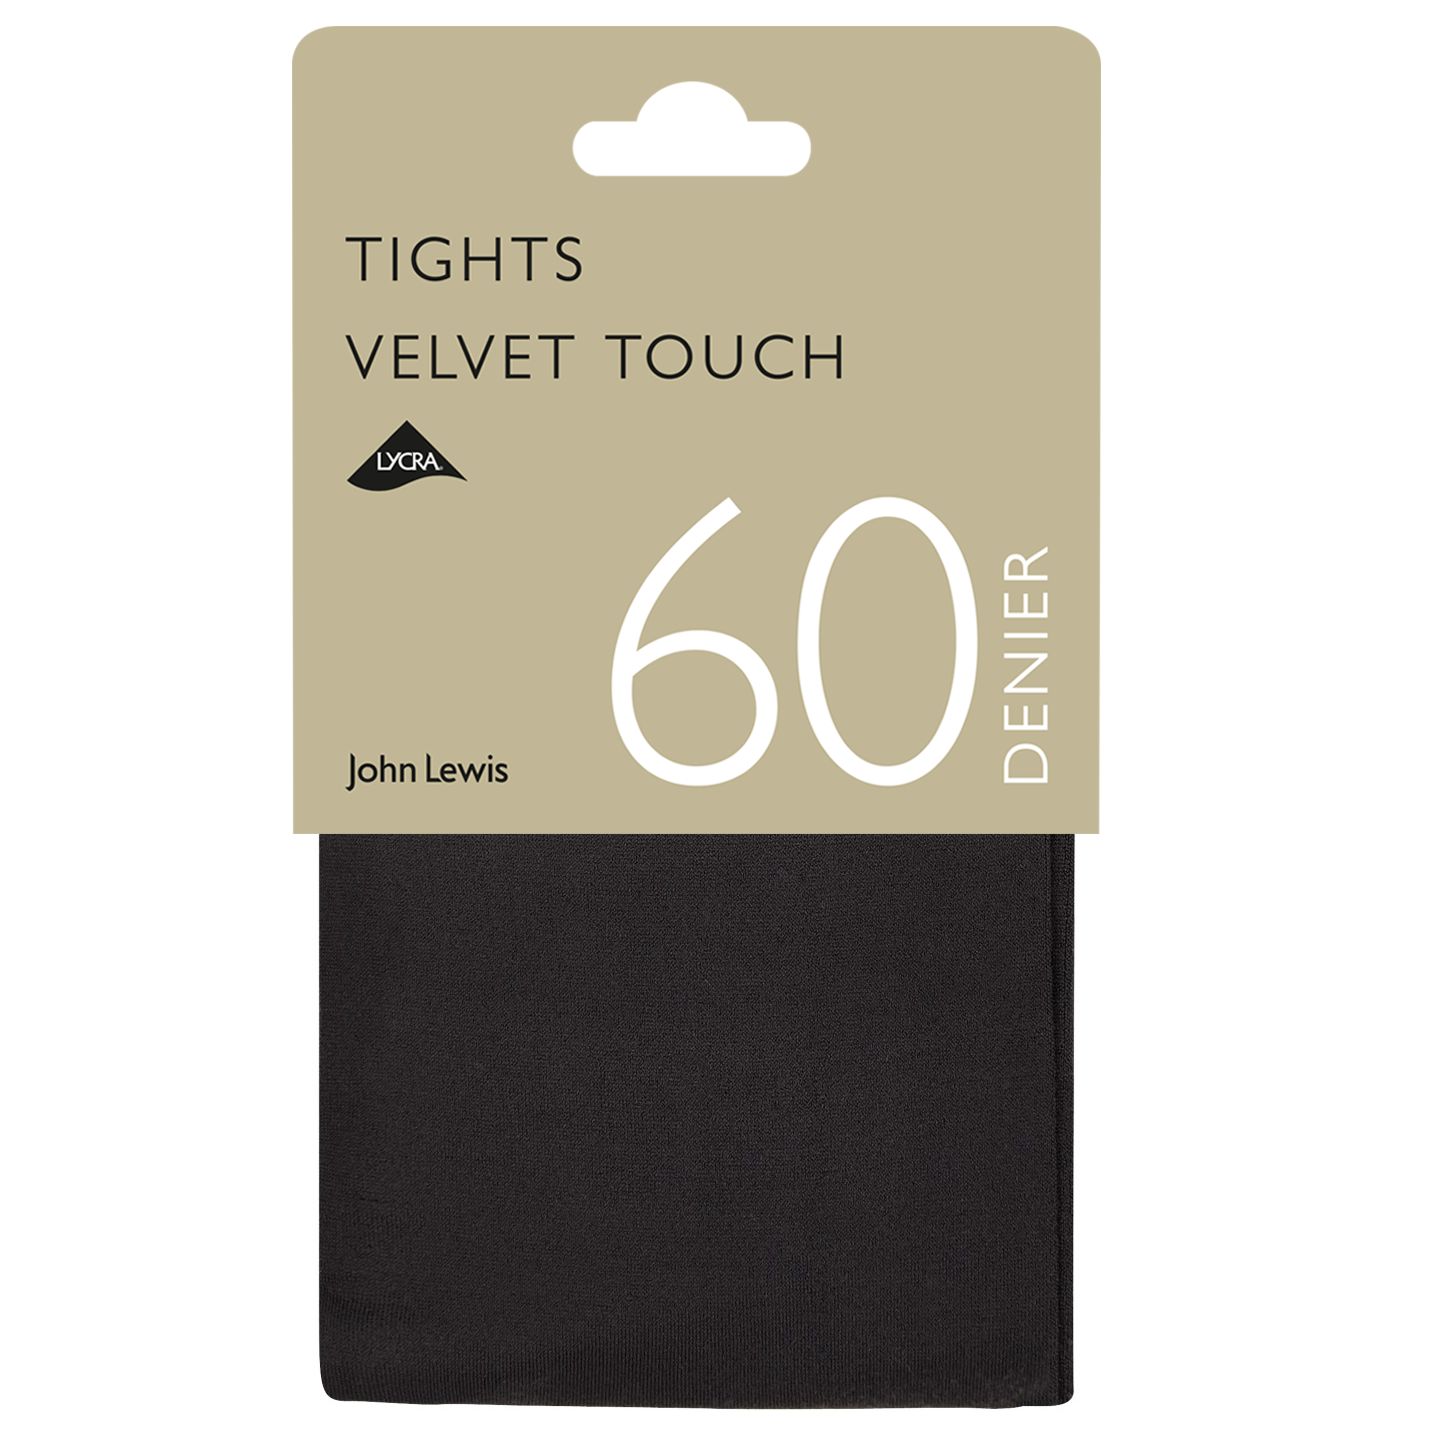 John Lewis 60 Denier Velvet Touch Opaque Tights, Charcoal